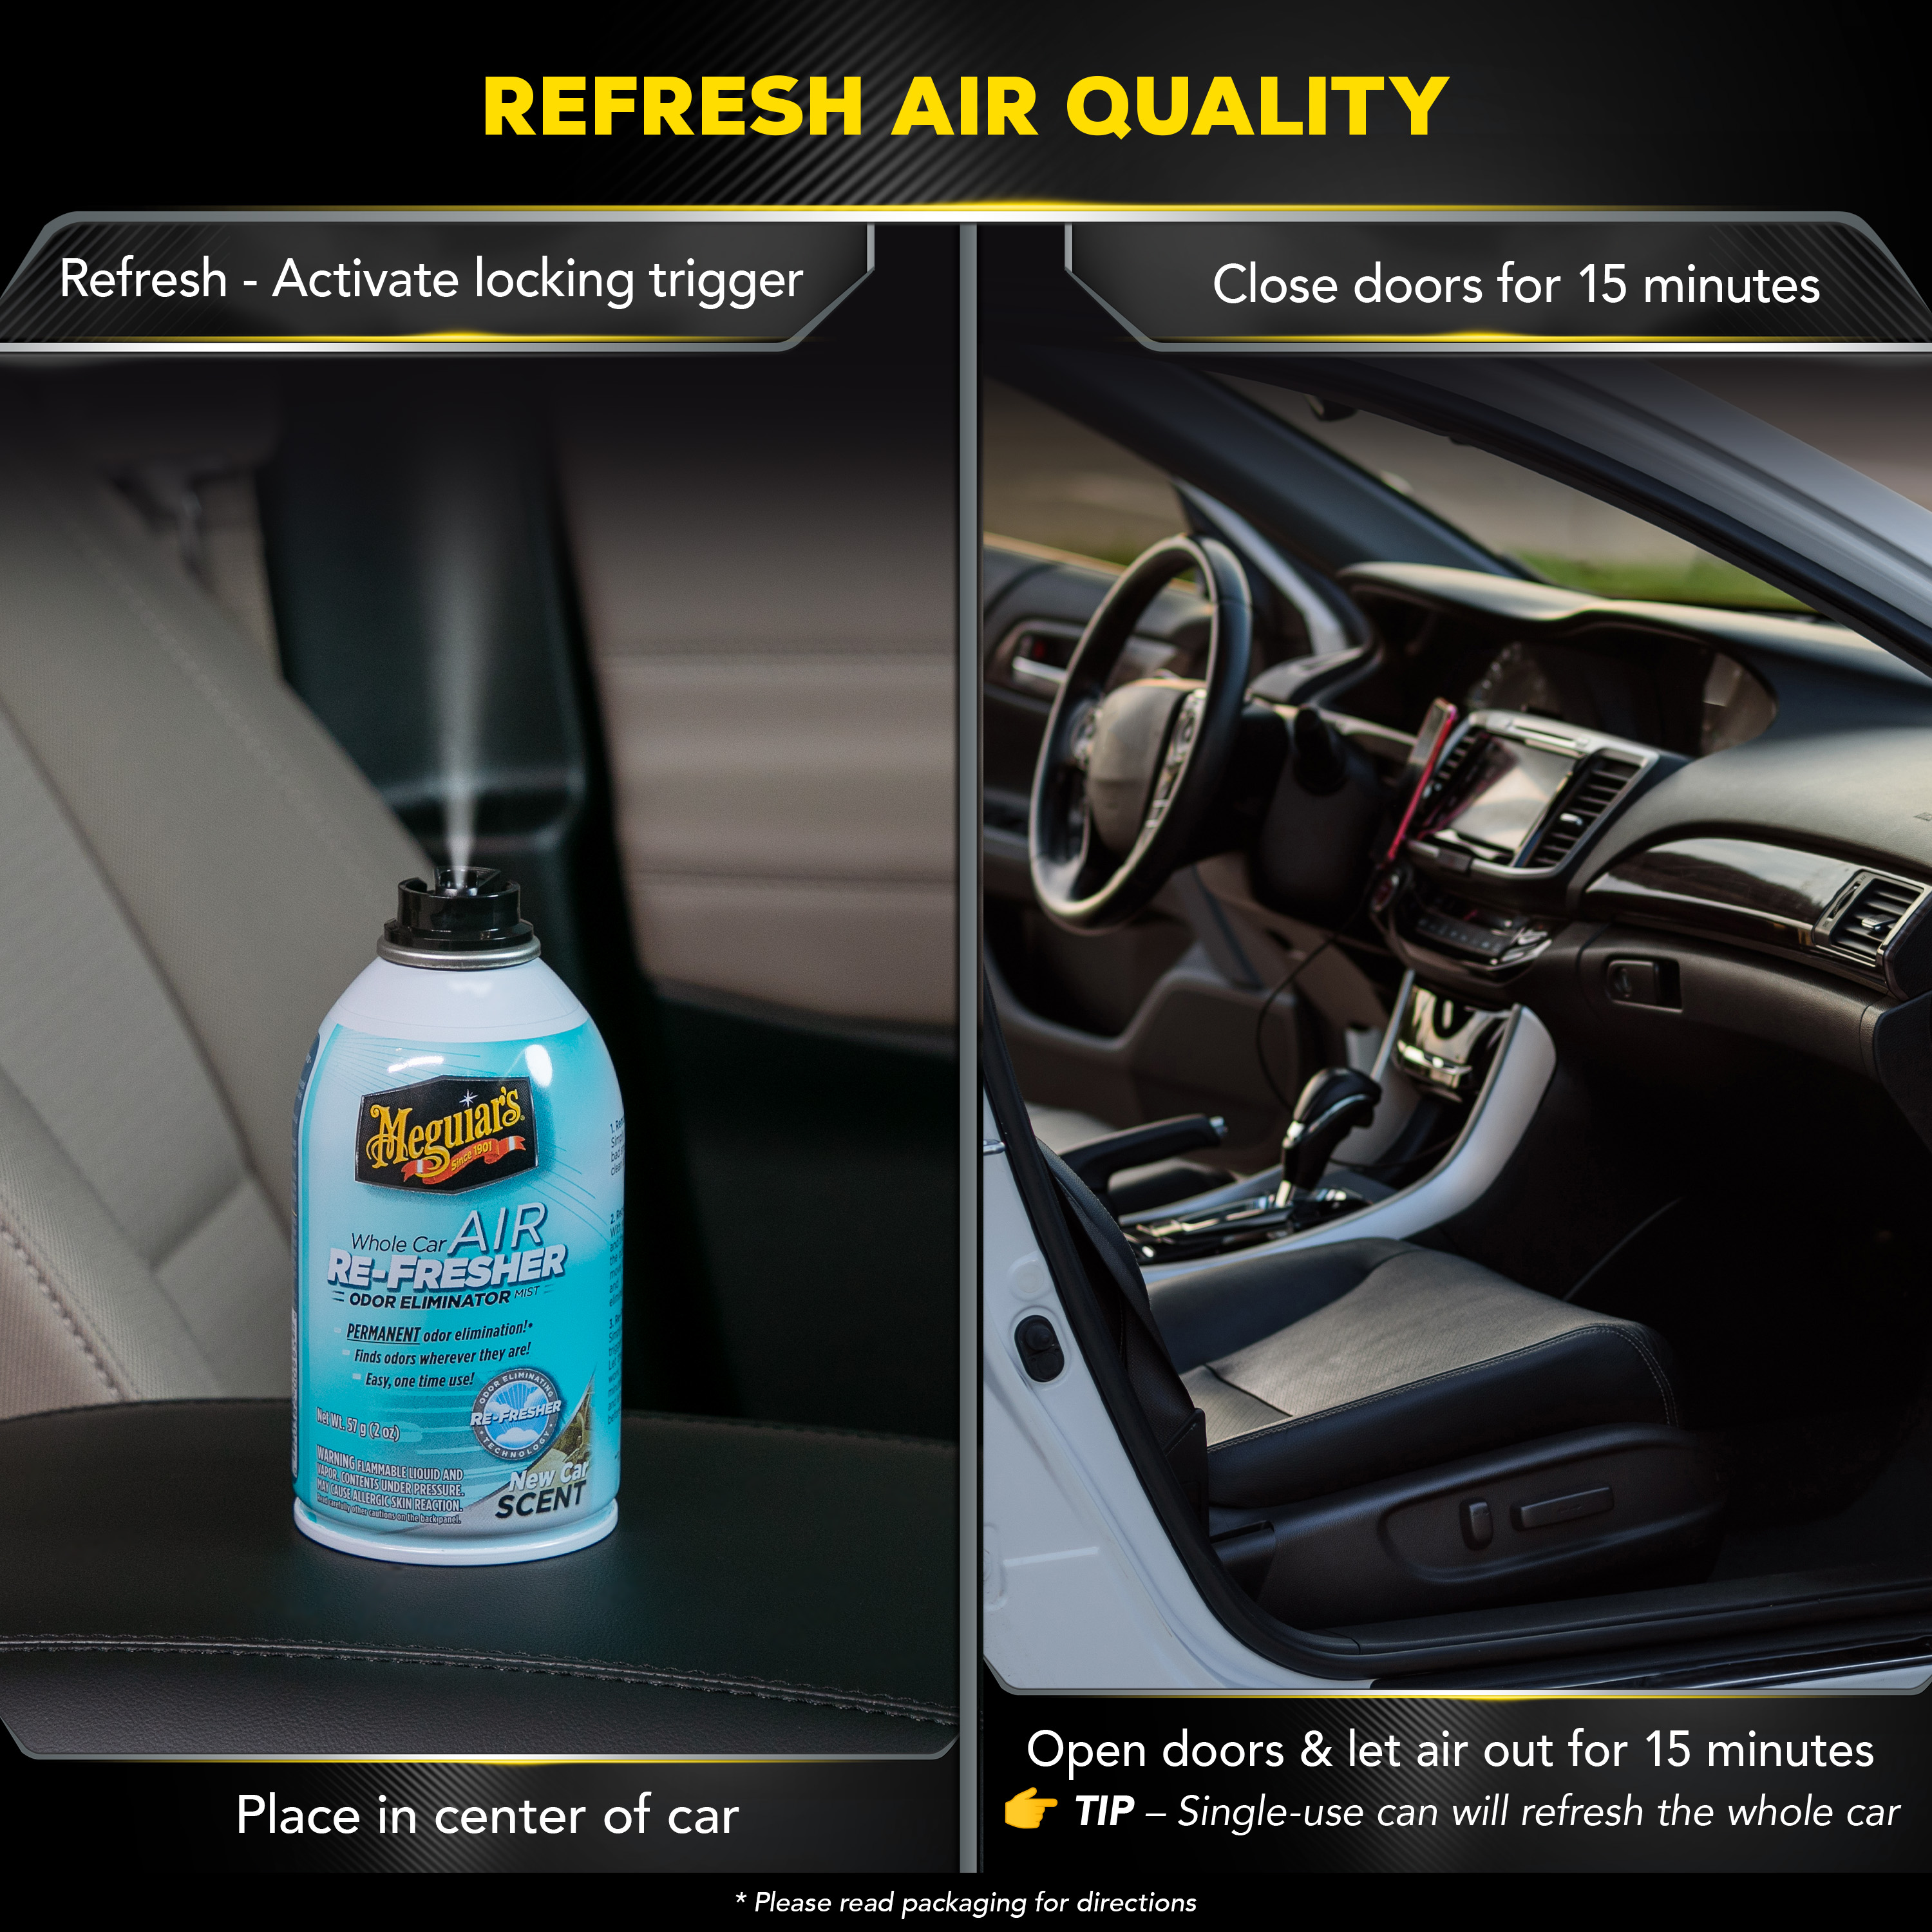 Meguiar's Whole Car Air Re-Fresher Odor Eliminator Mist - New Car Scent,  G16402, 2 oz, Stand Alone Aerosol 